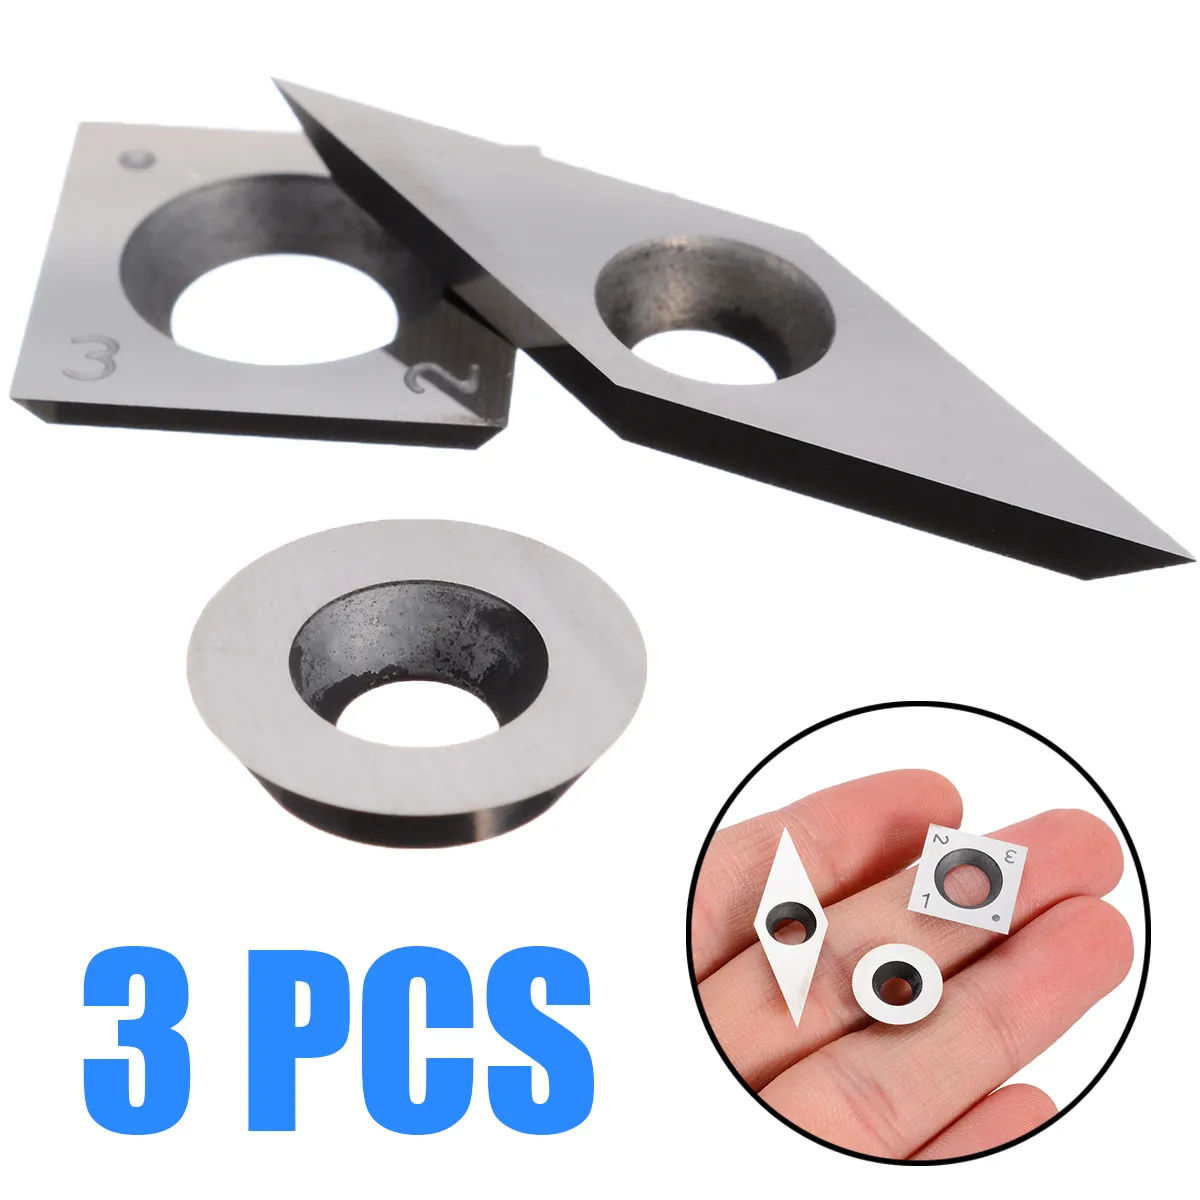 CNC Torna Aracı Ahşap Çalışma Torna için 3pcs / Set Tungsten Elmas Uçlar 94.5HRA Kesici Pratik Bıçaklar